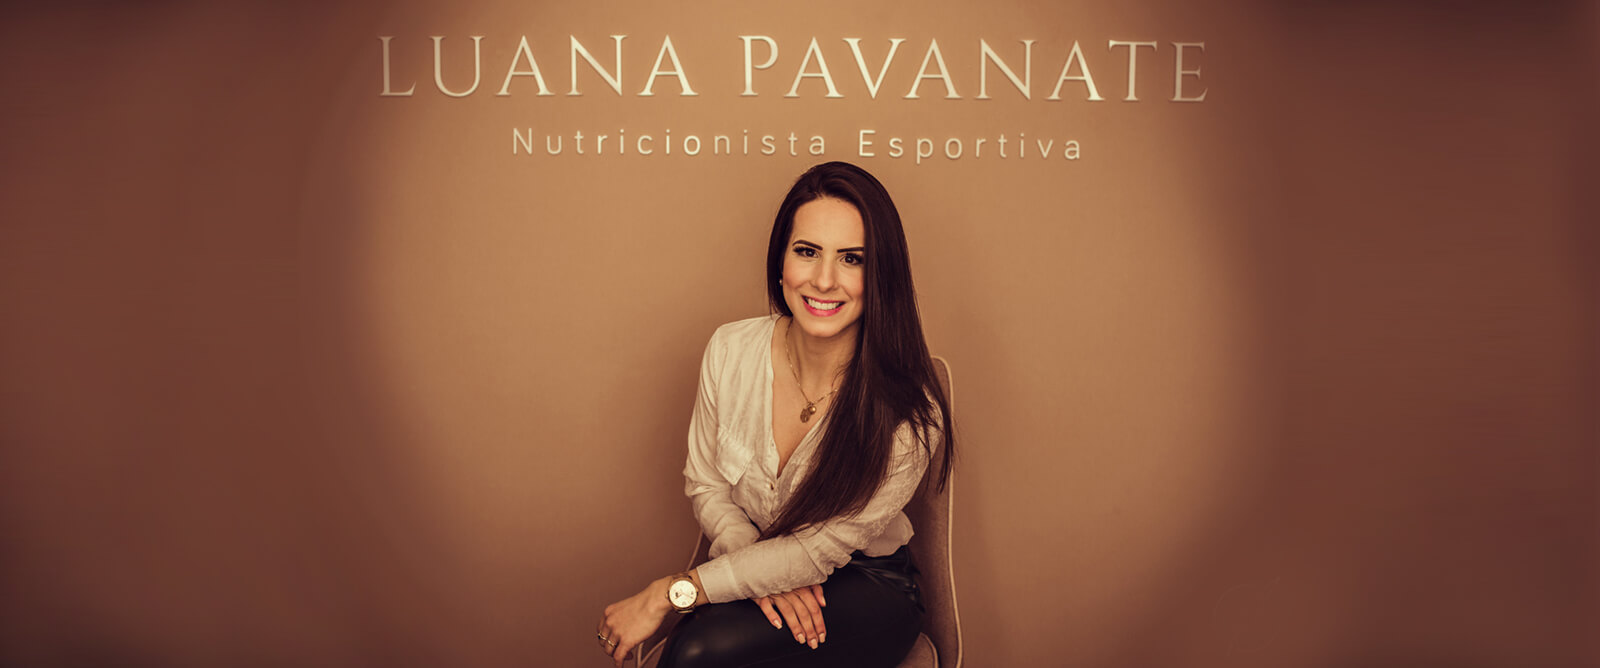 Banner Profissional Luana Pavanate